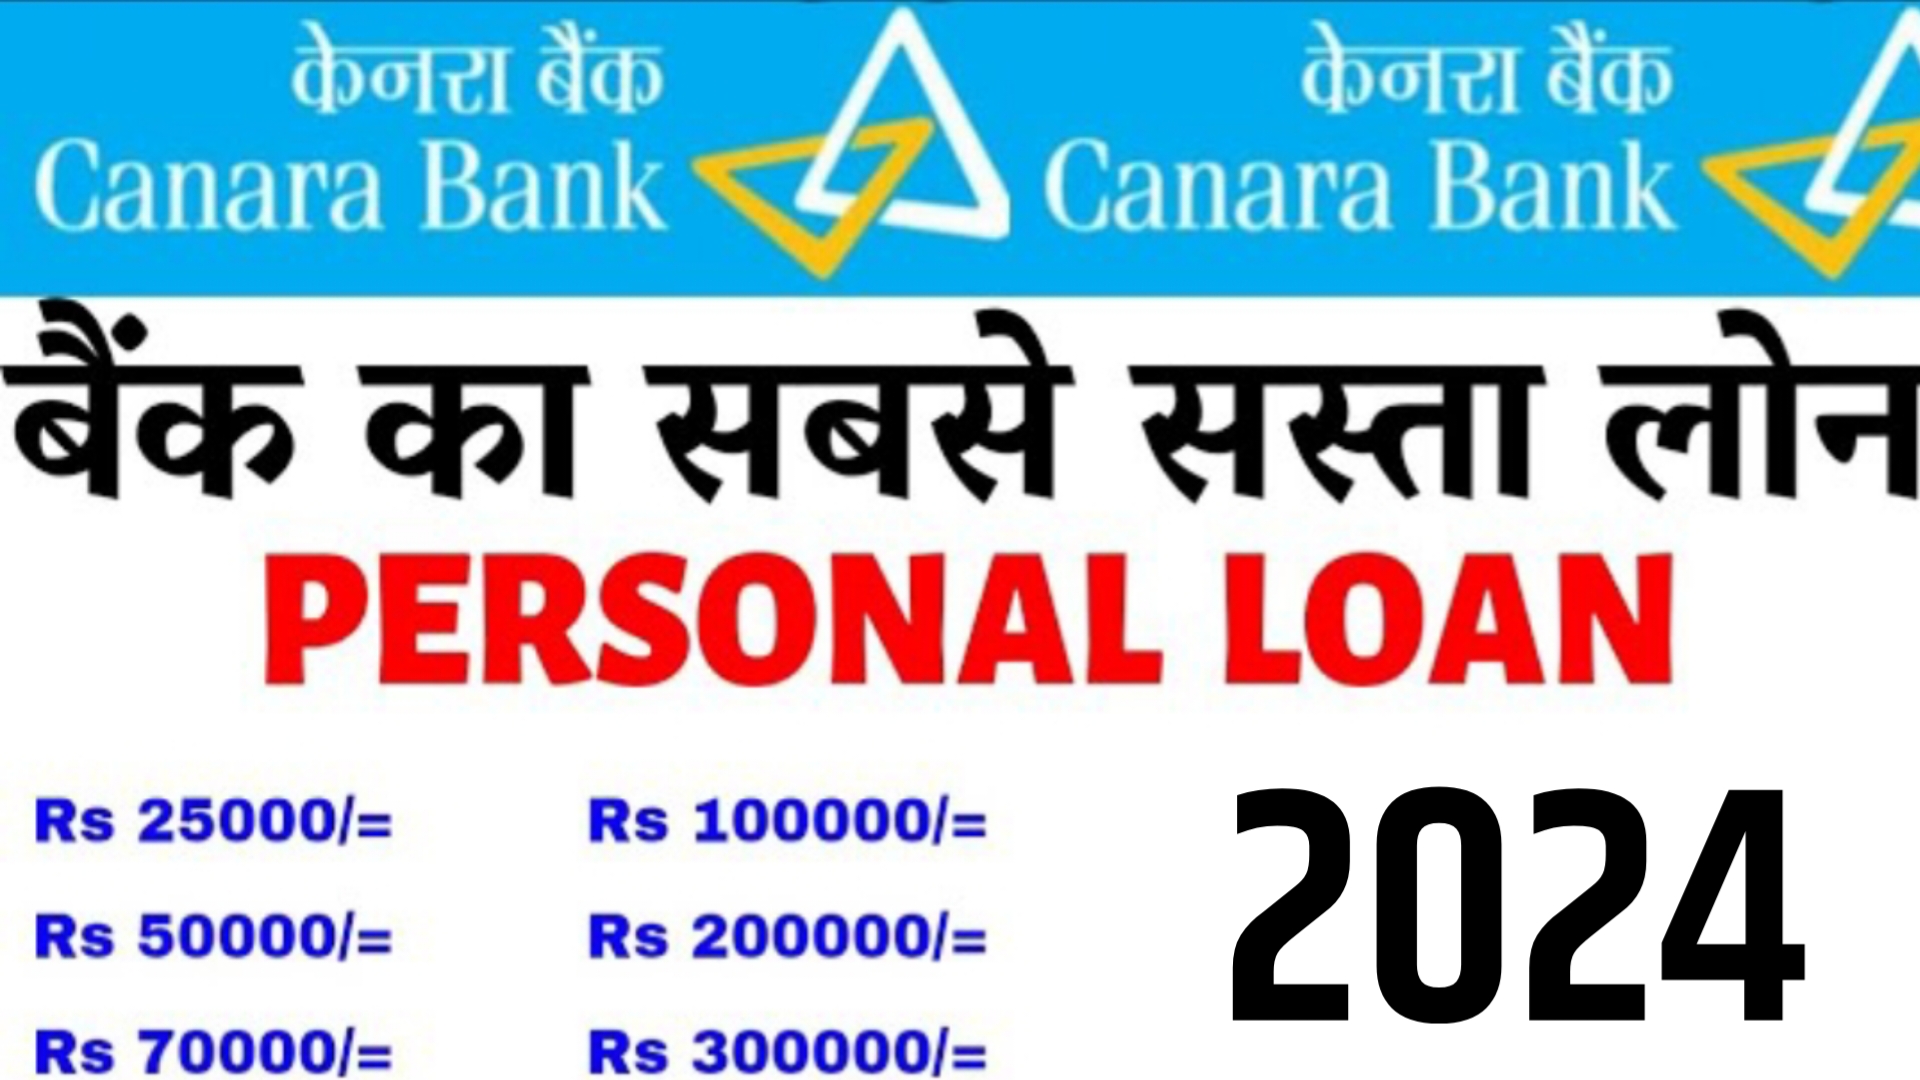 Canara Bank Personal Loan Interest